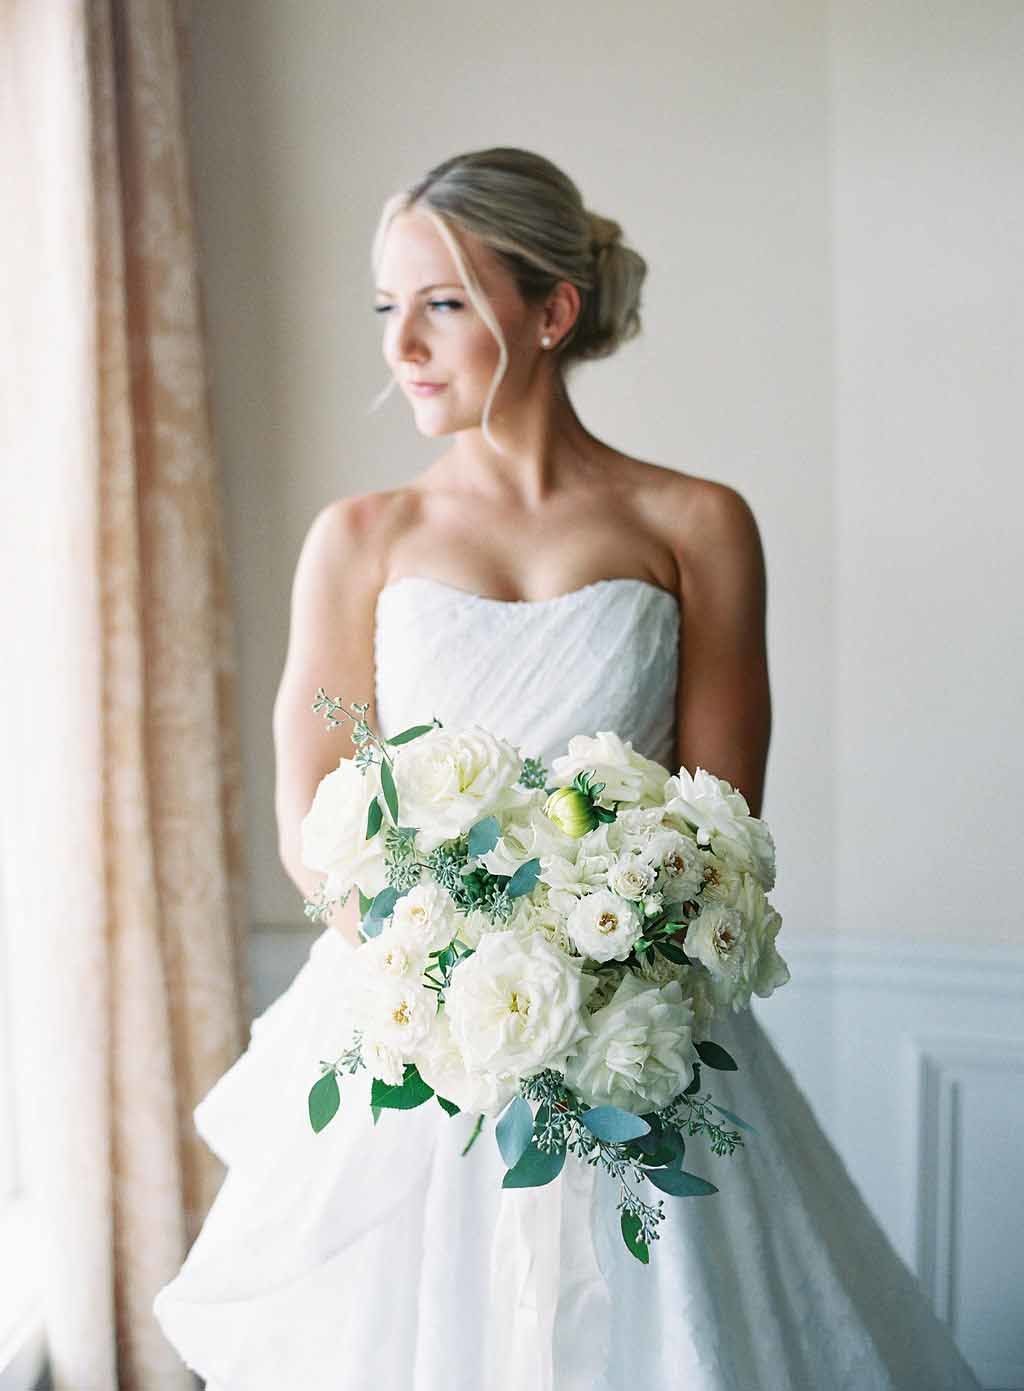 bride in white dress holding bouquet of white garden flowers